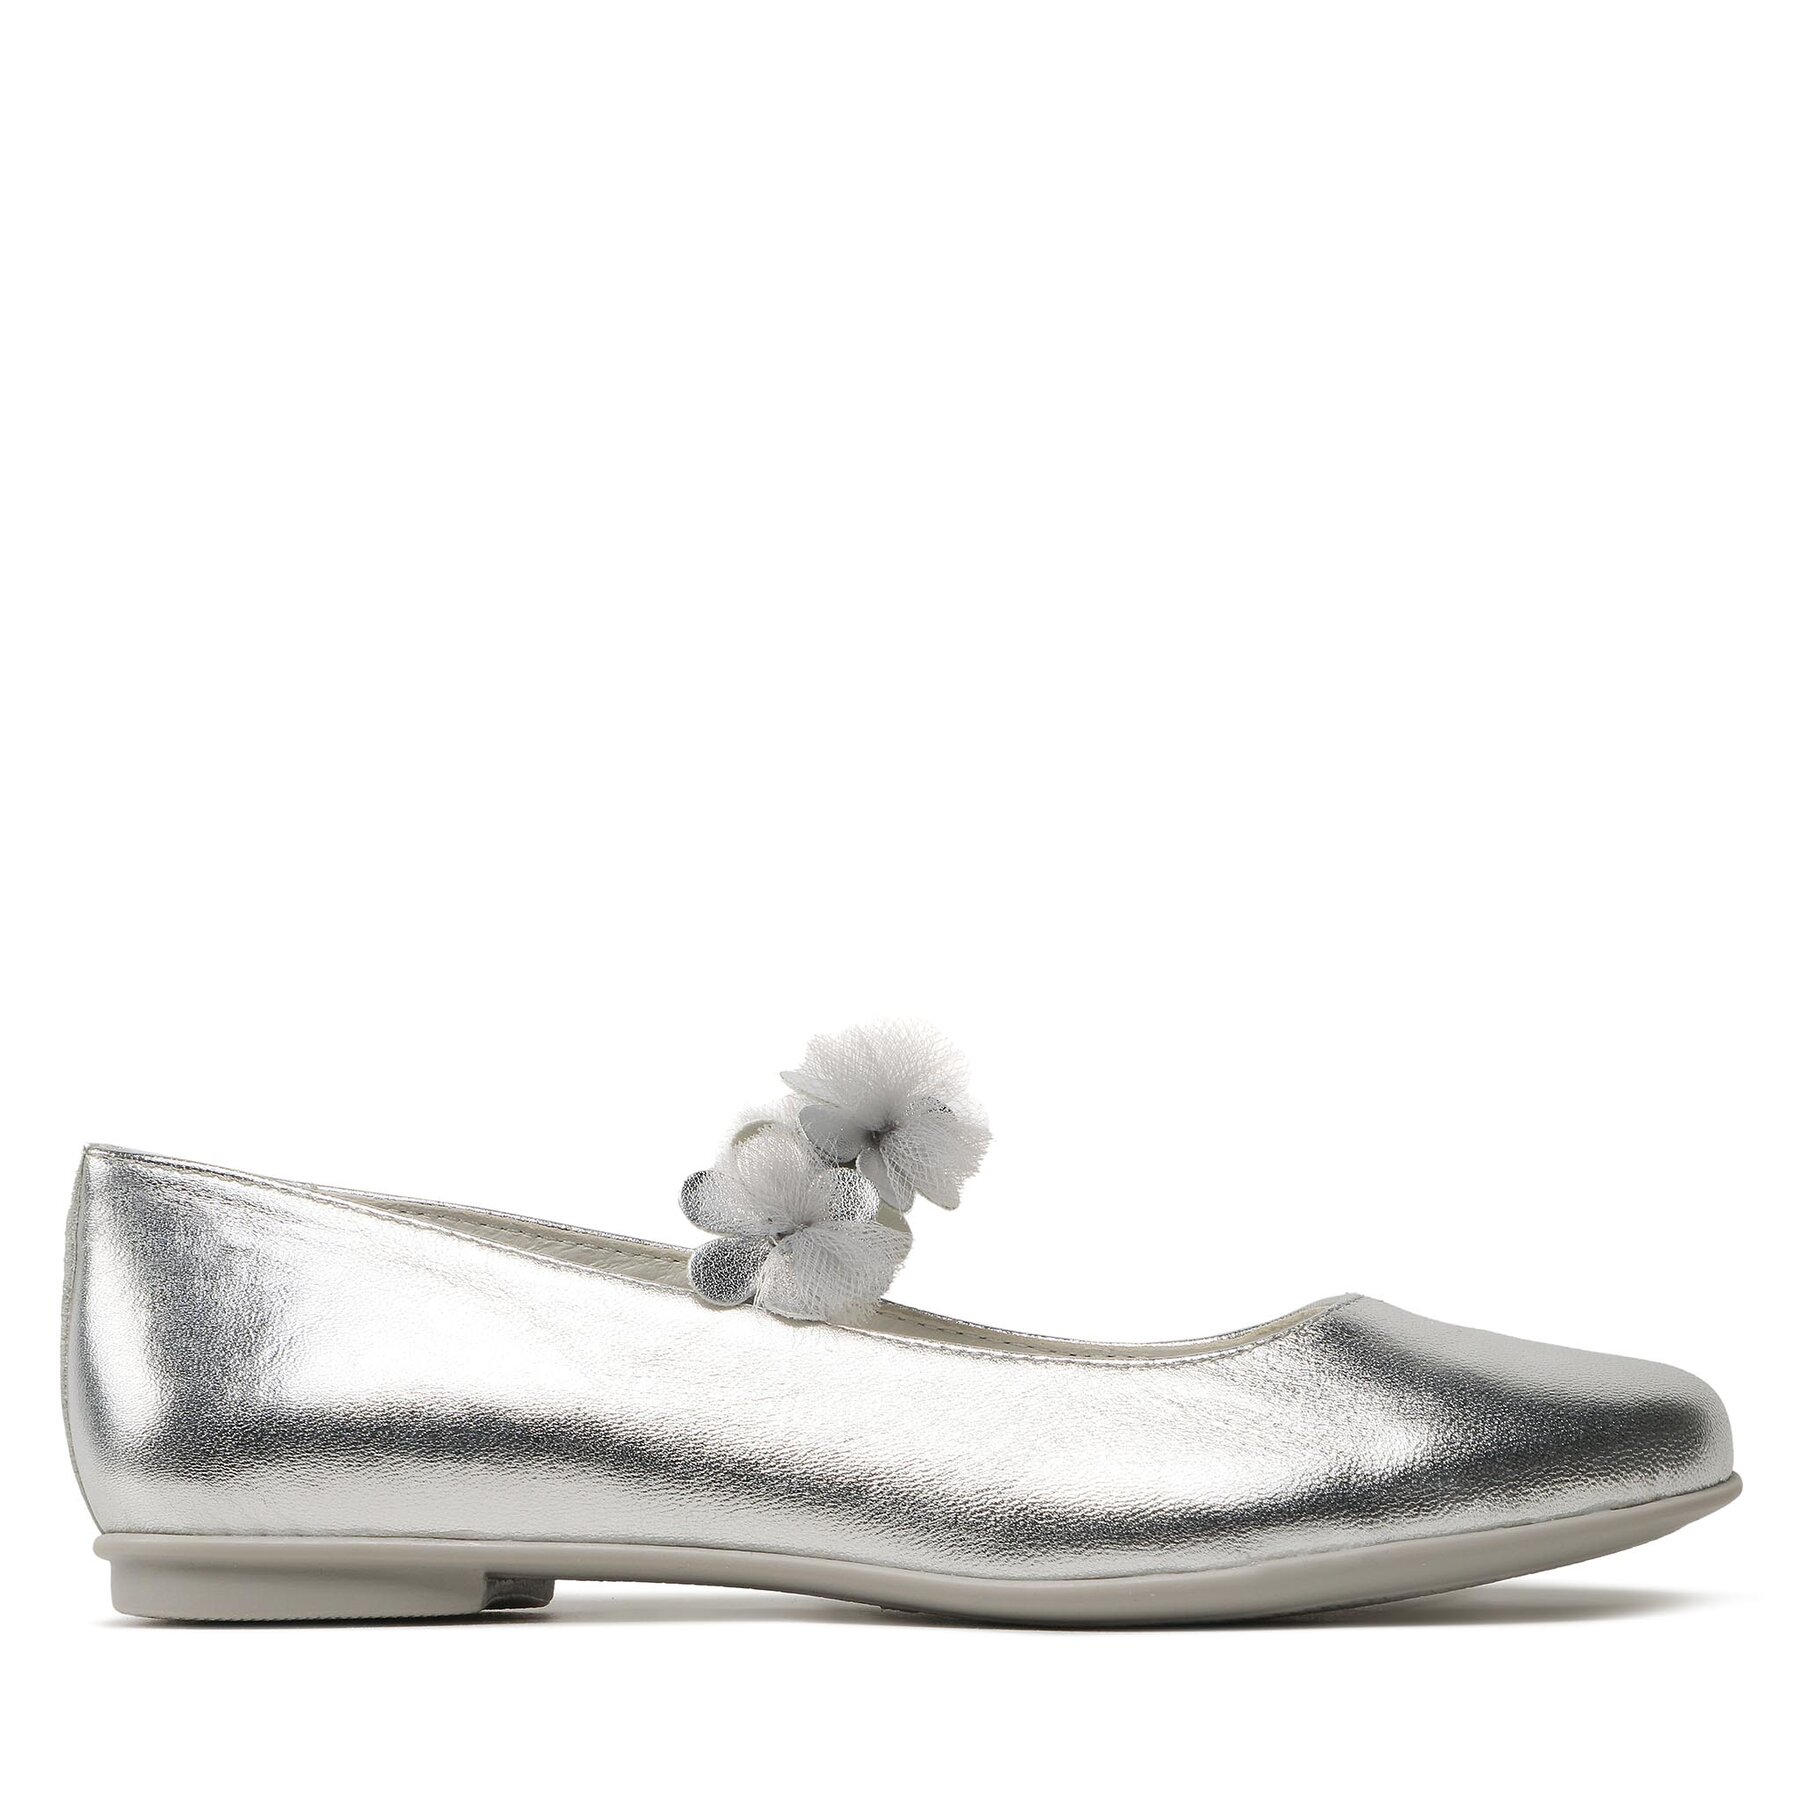 Cipele Primigi 3920322 D Silver